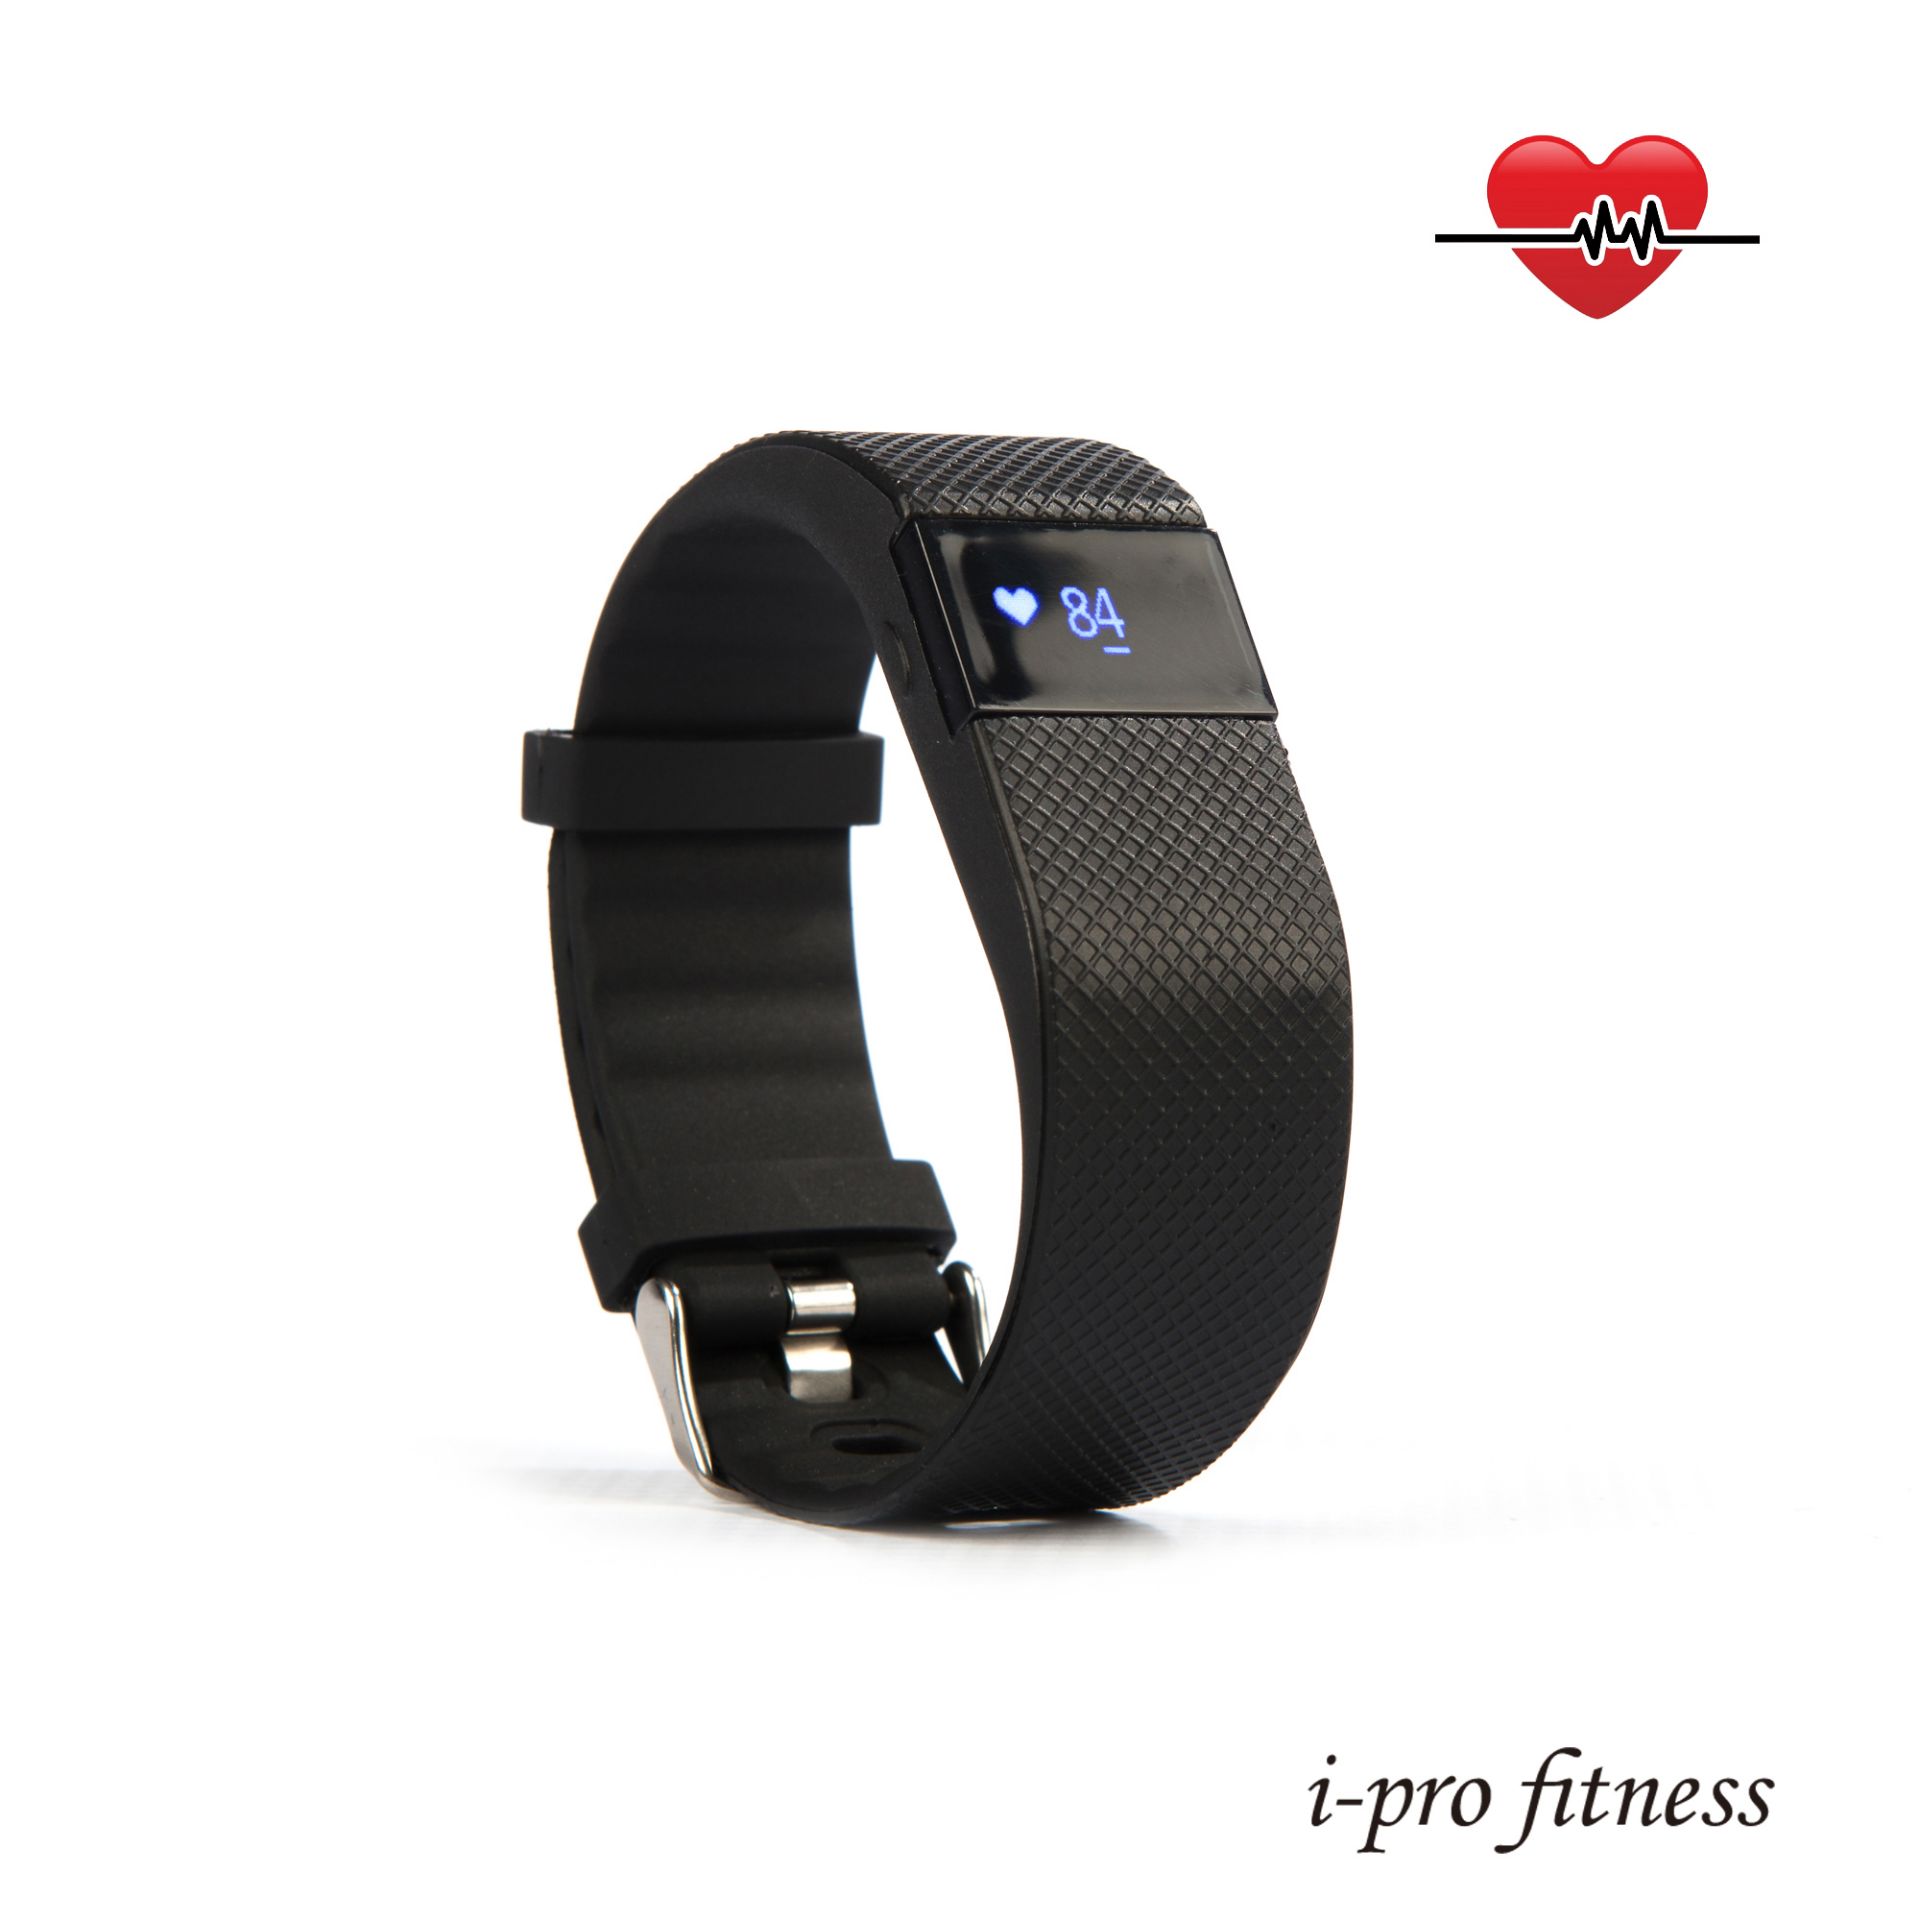 20x Fitness Tracker i-pro fitness, Bluetooth 4.0 Sports Smart Bracelet, Heart Rate Monitor, - Image 3 of 8